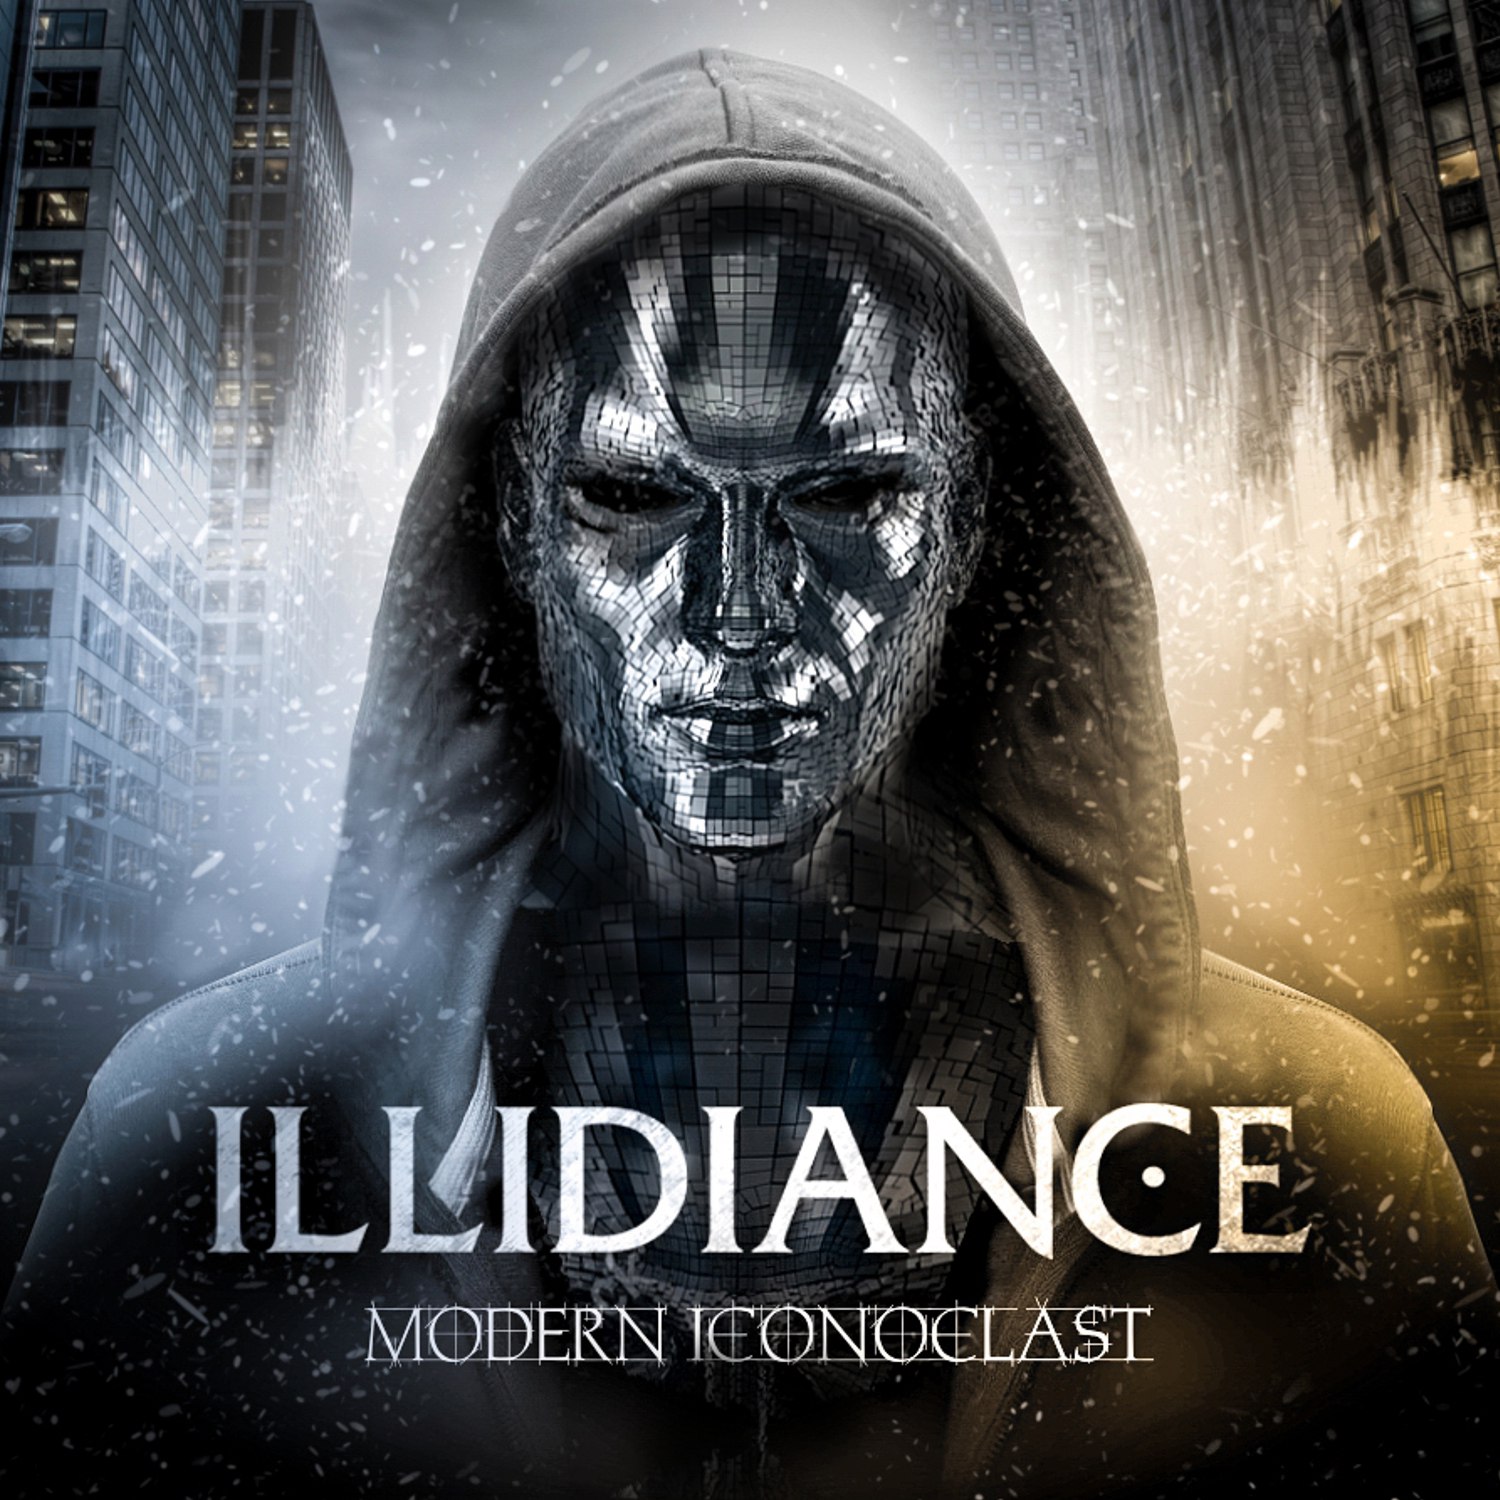 Illidiance - Modern Iconoclast [Single] (2016) Album Info